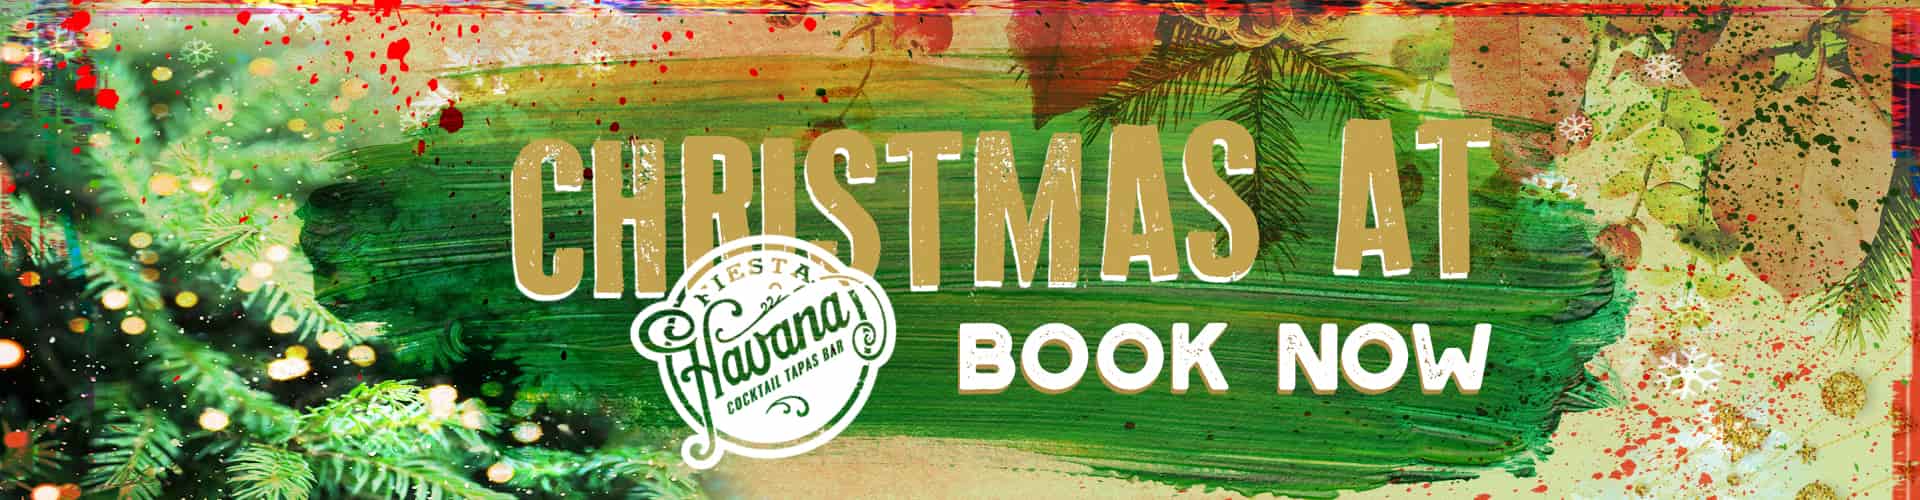 Christmas at Fiesta Havana - Book Now!